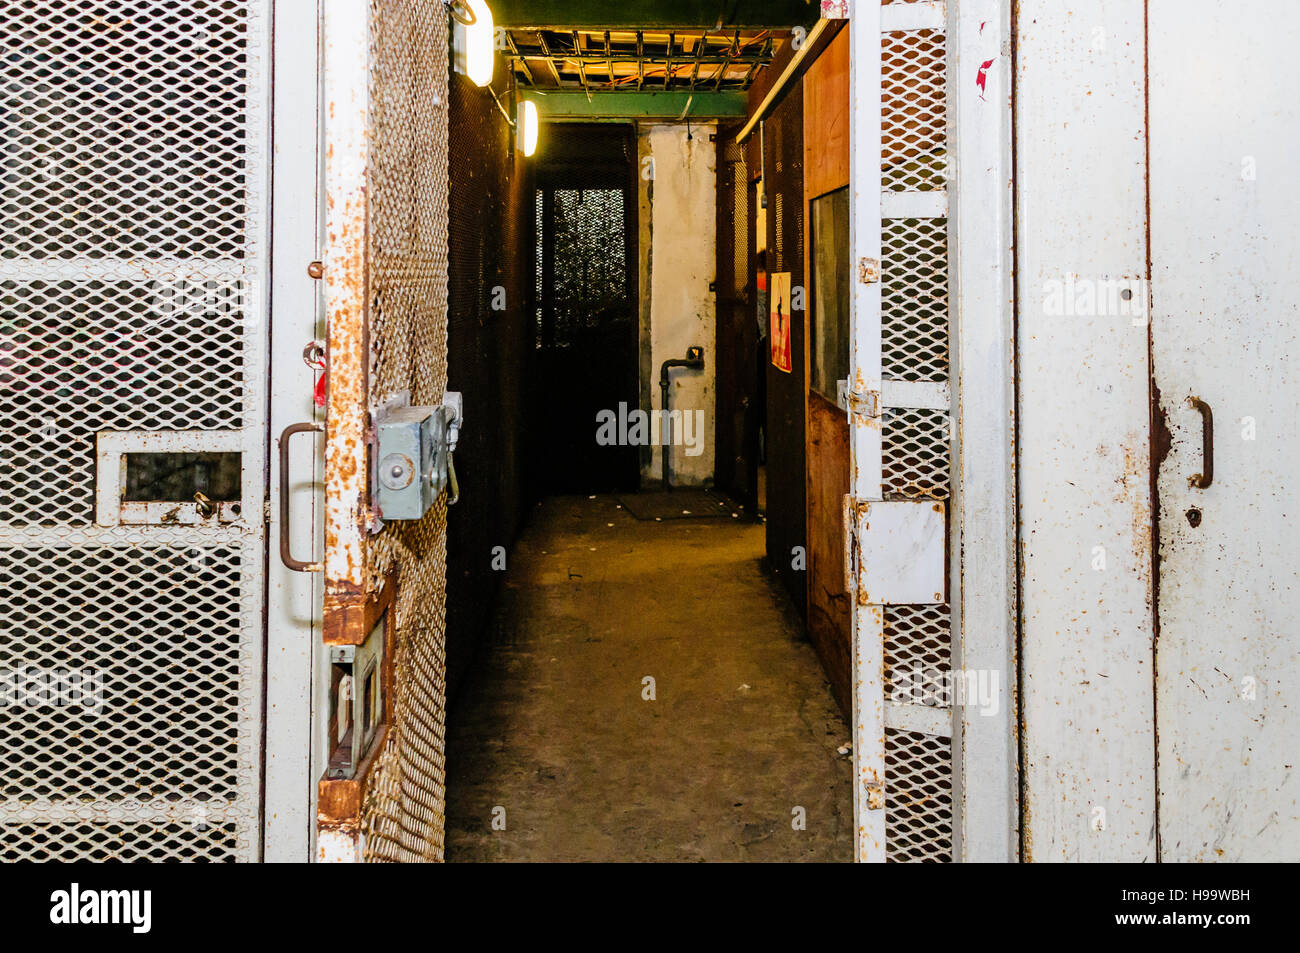 Steel barred doors in Crumlin Road Gaol, a Victorian prison modelled on Pentonville in London. Stock Photo